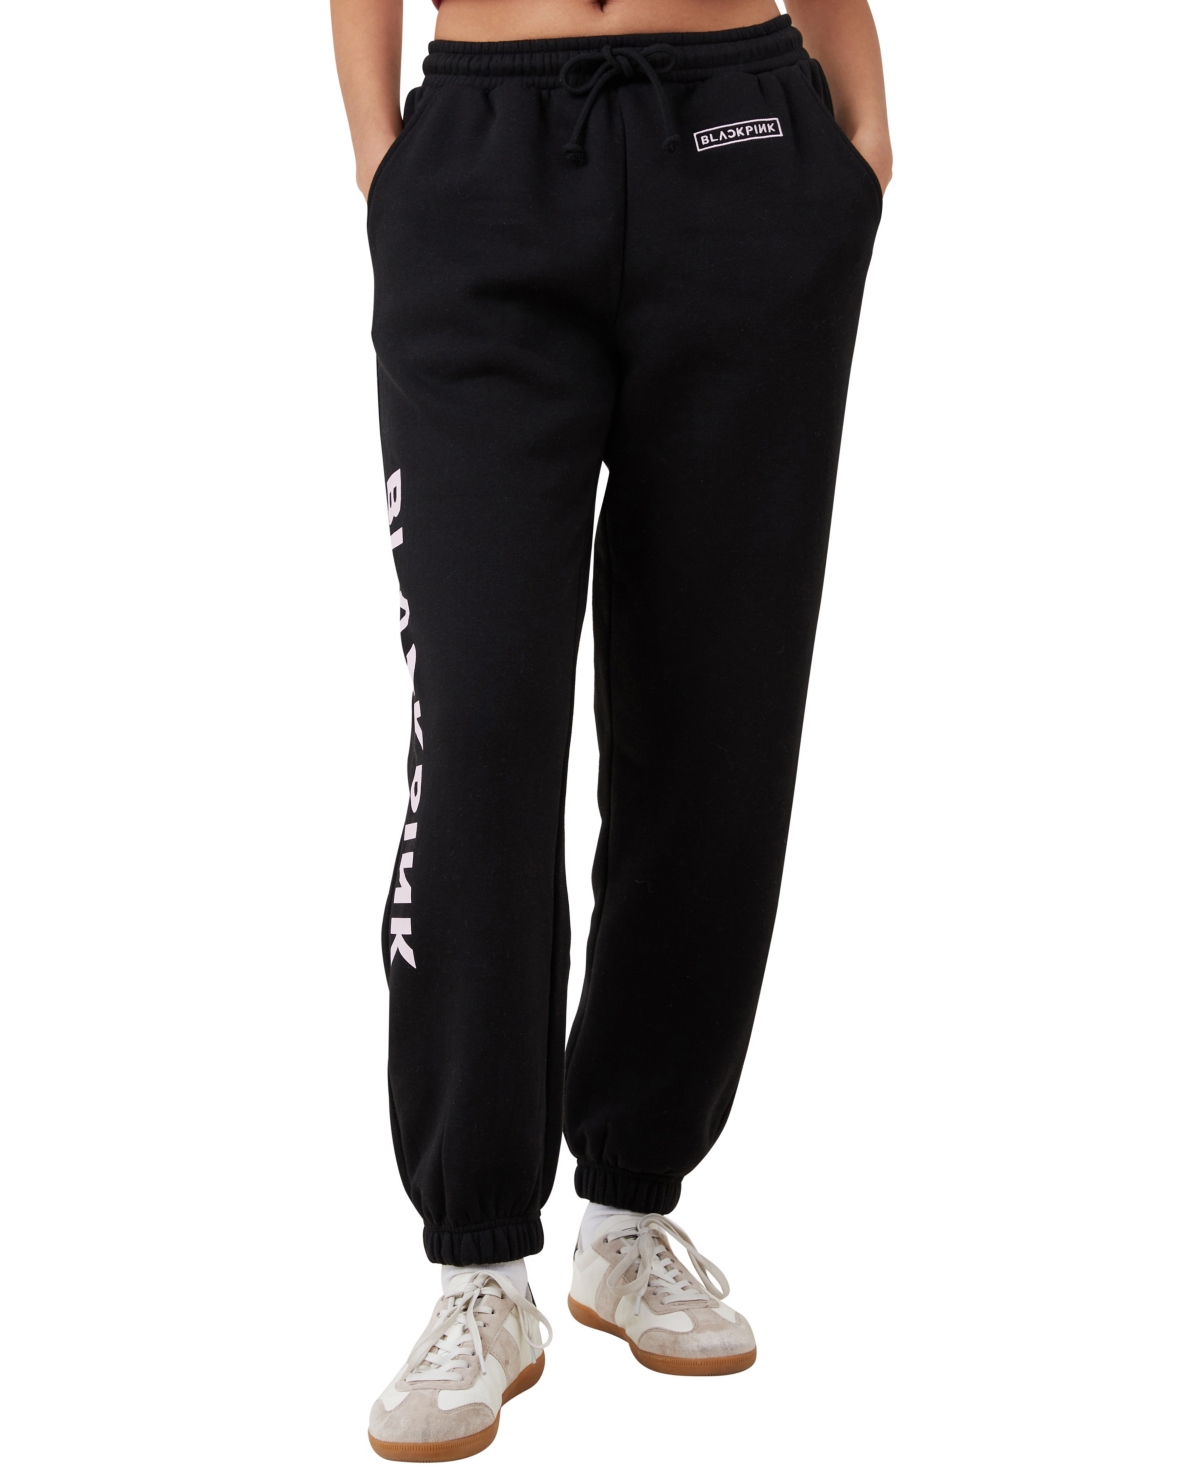 Women's Fleece Sweatpants - Black Pink Logo, Black